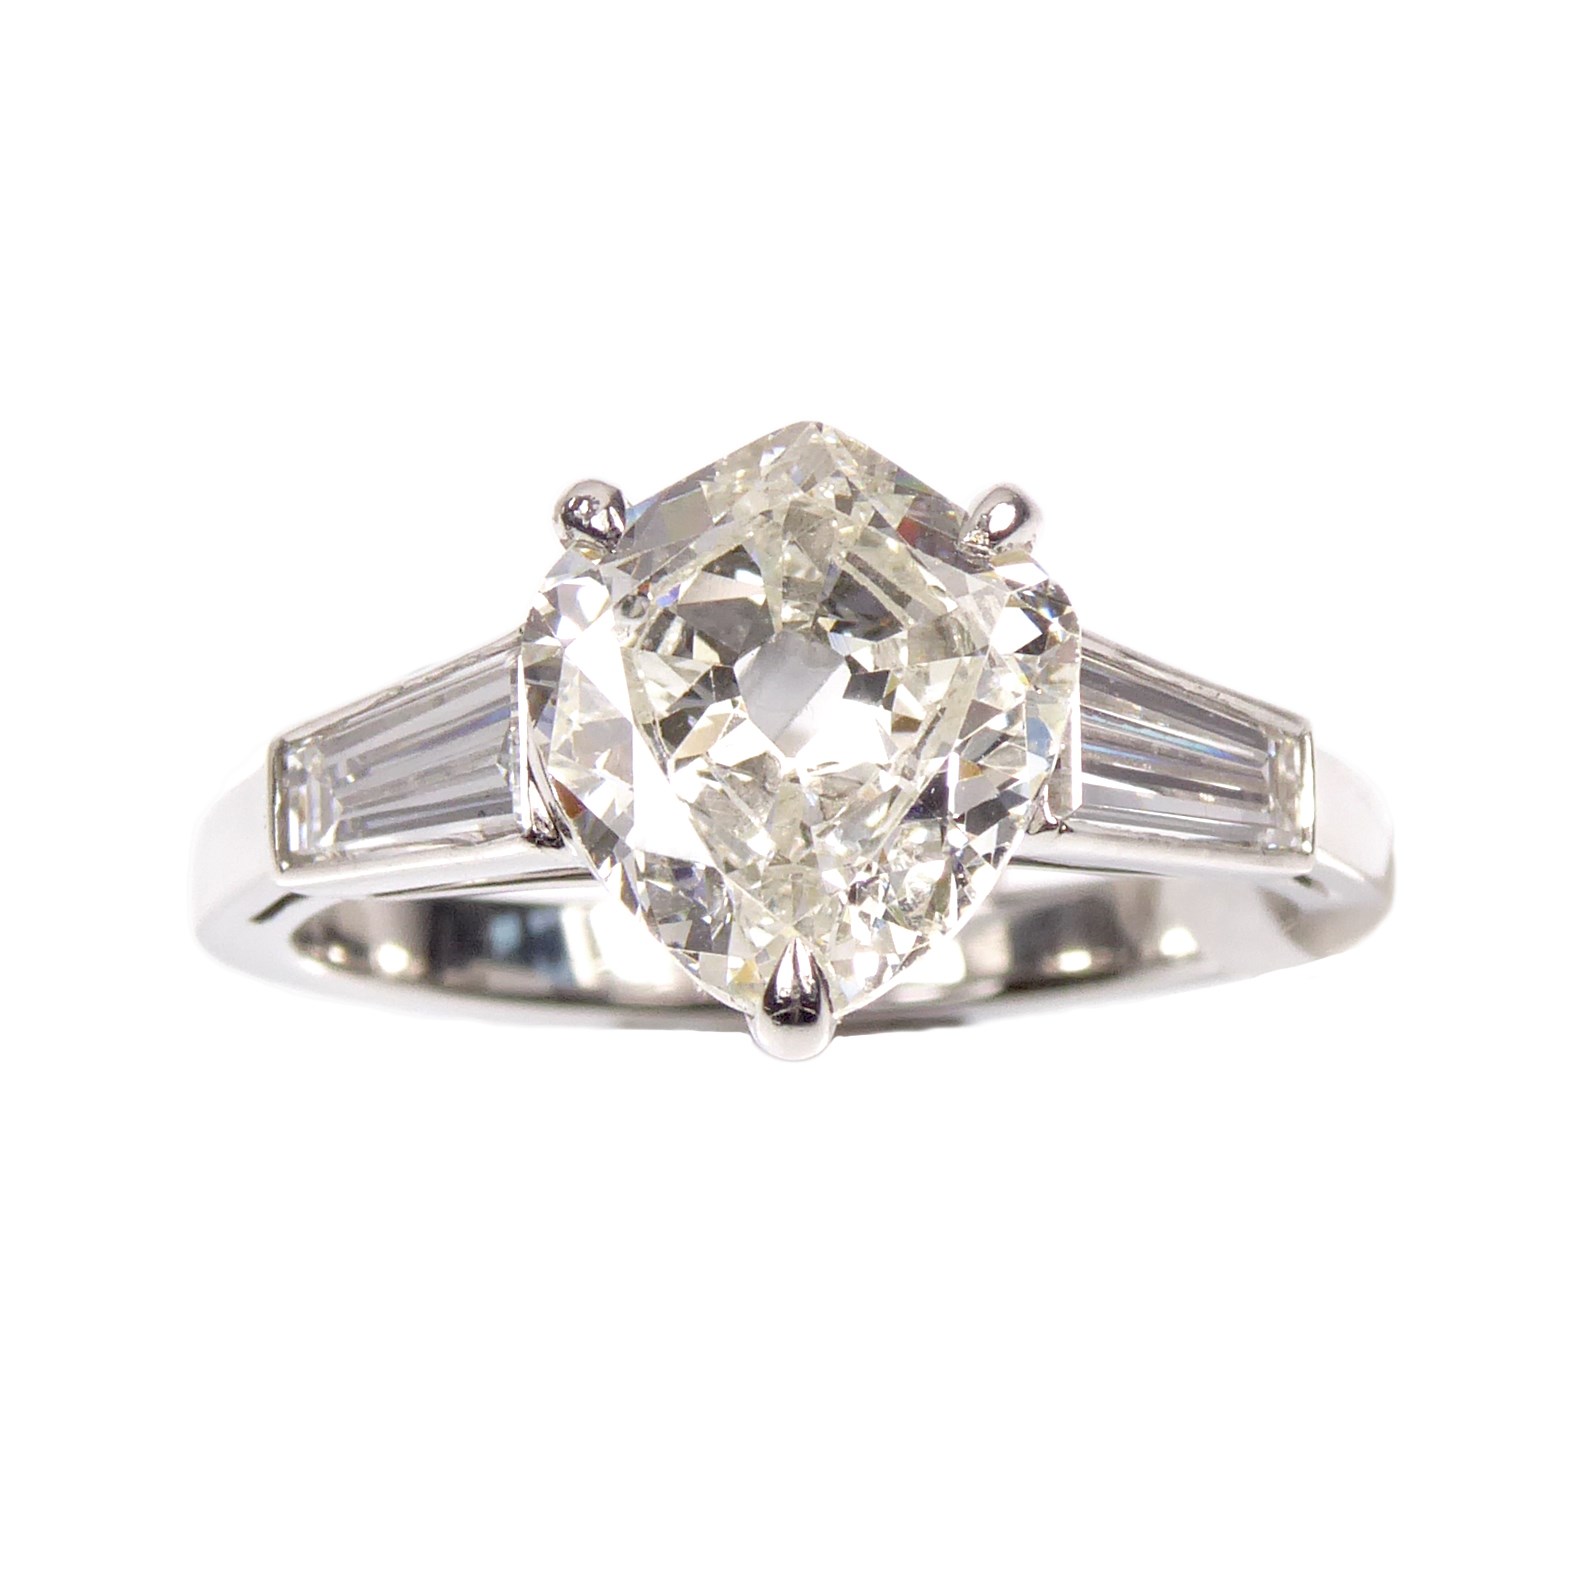 Step shield cut-diamond ring | VAK | The Jewellery Editor